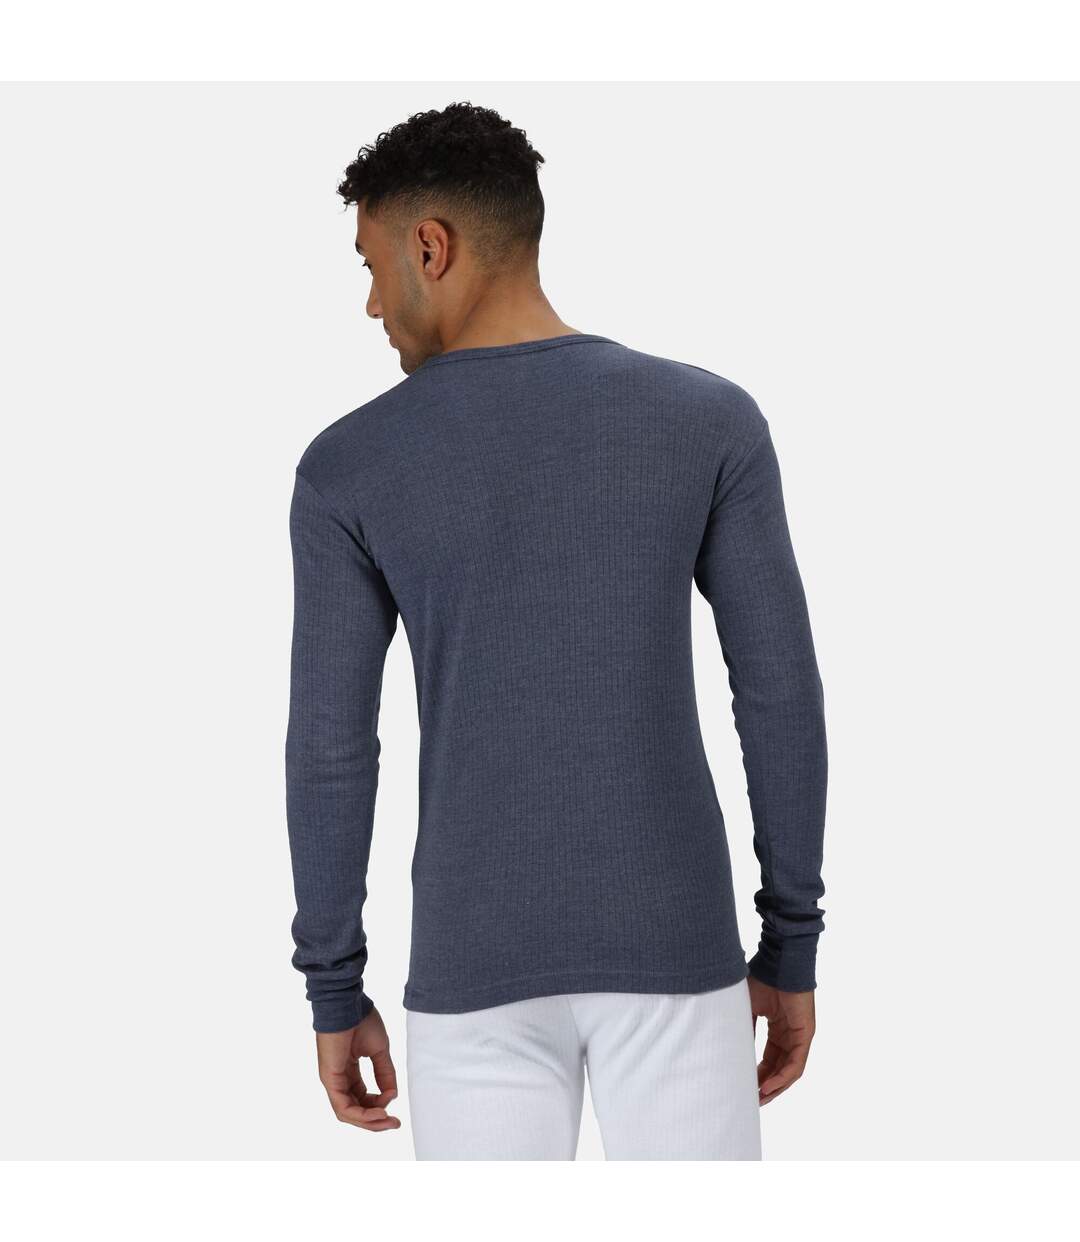 Regatta Thermal Underwear Long Sleeve Vest / Top (Denim Blue)